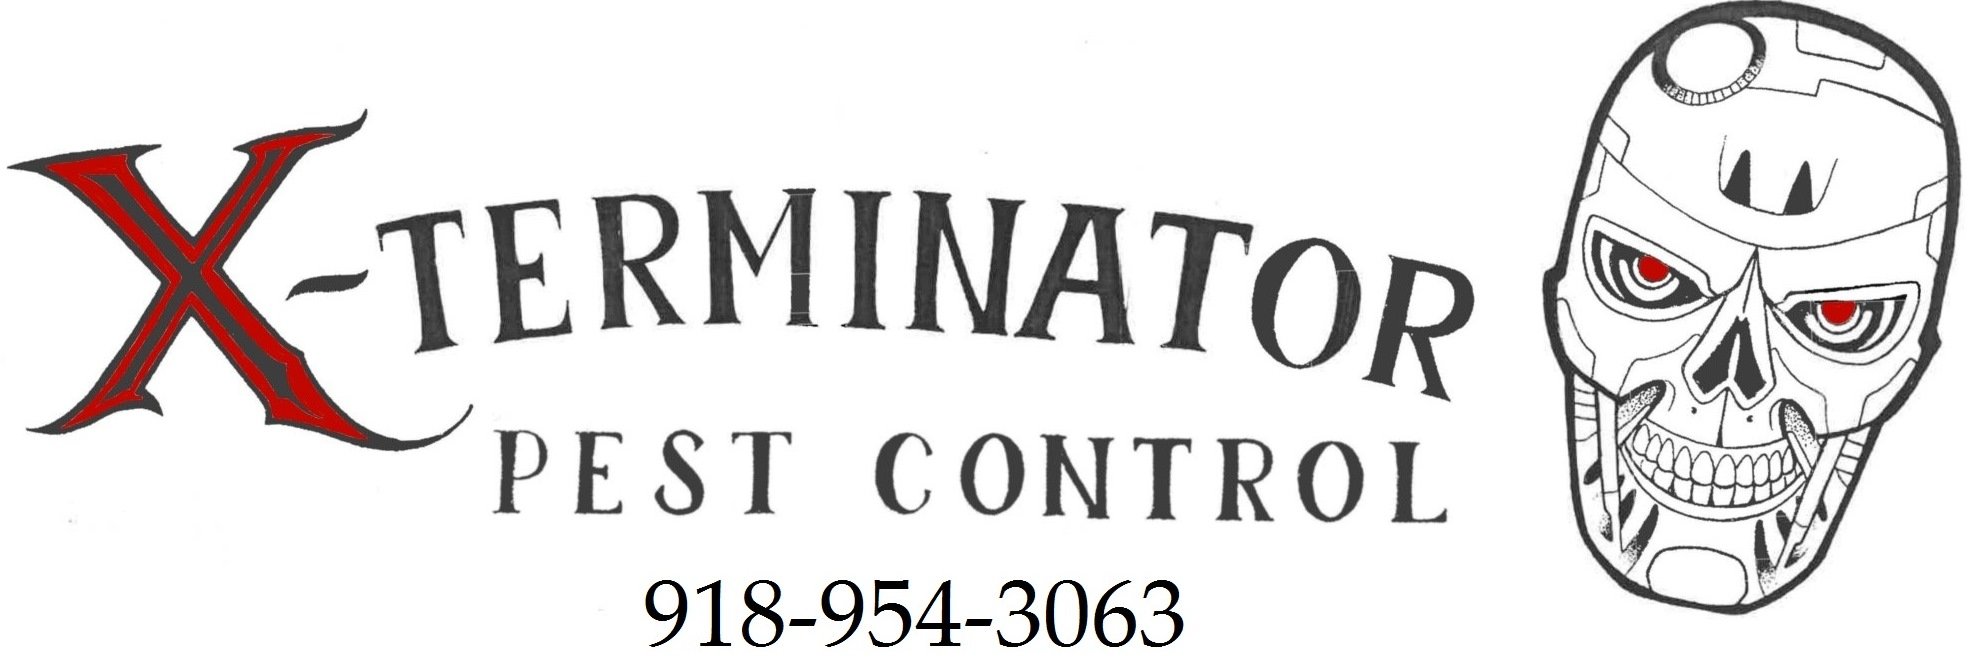 X-Terminator Pest Control Logo